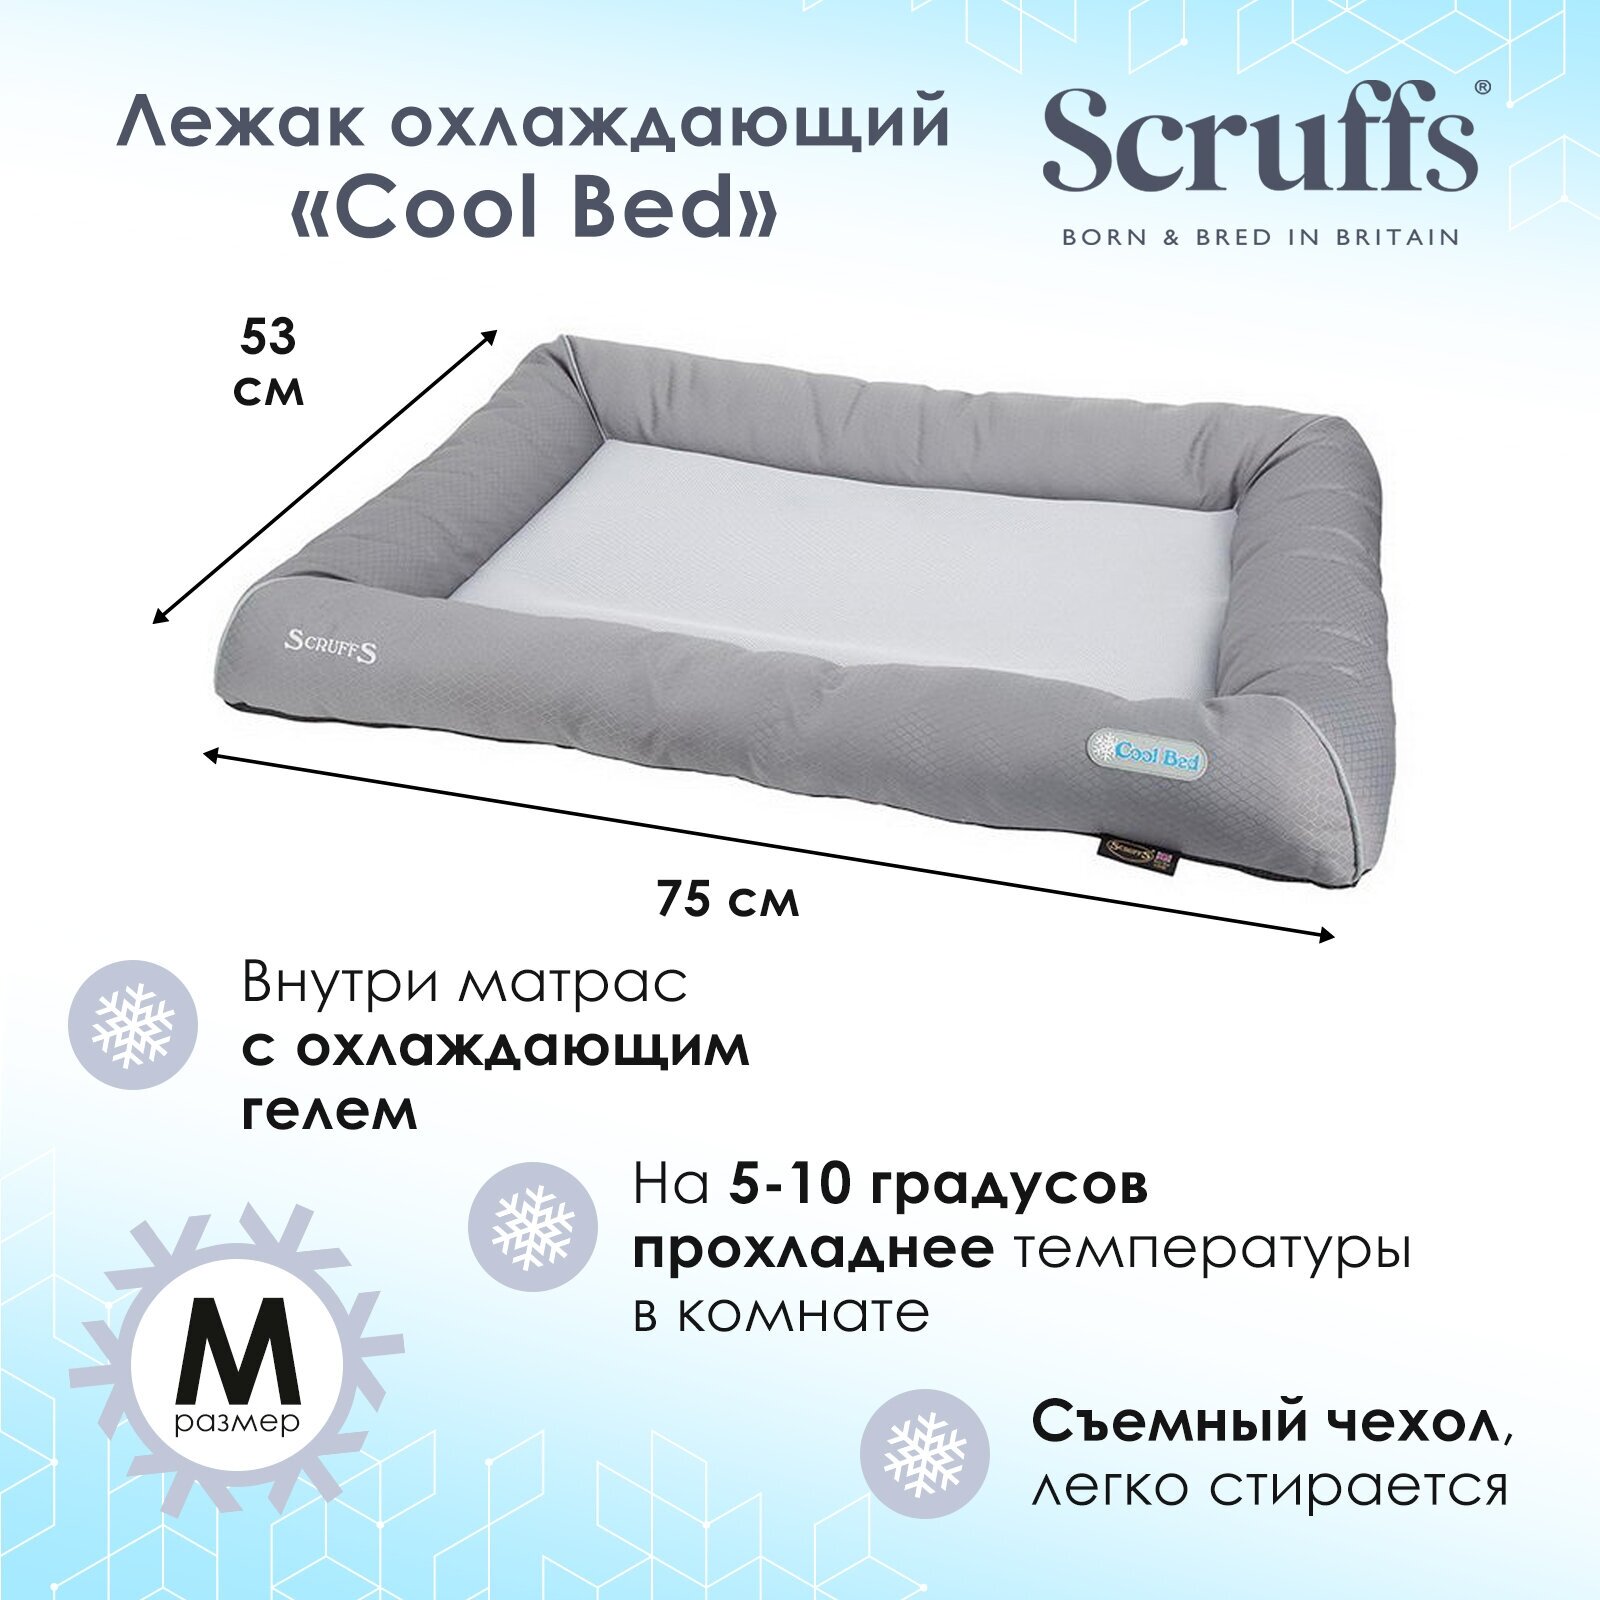 Охлаждающий лежак SCRUFFS "Cool Bed" , серый 75*53см (Великобритания)